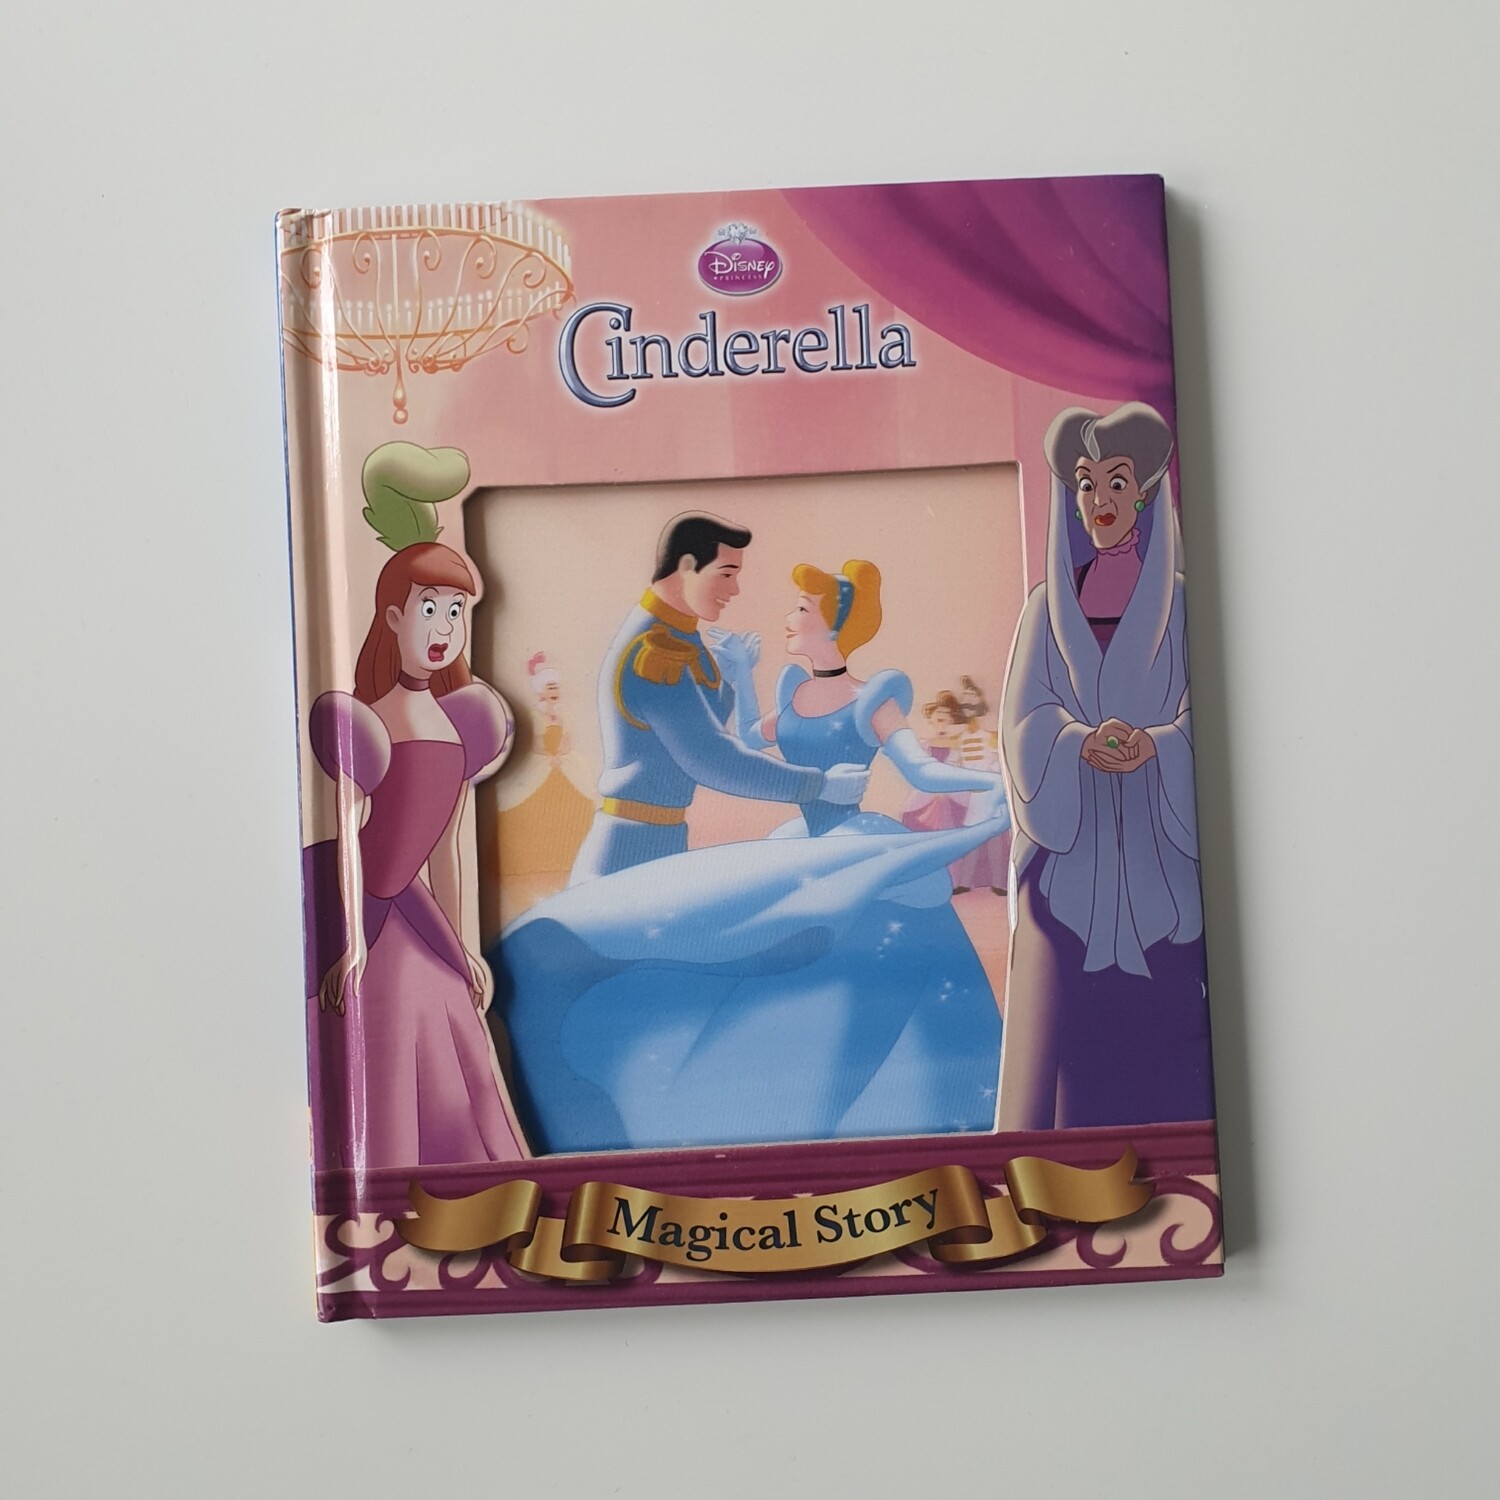 Cinderella Hologram / lenticular print Notebook - no original book pages